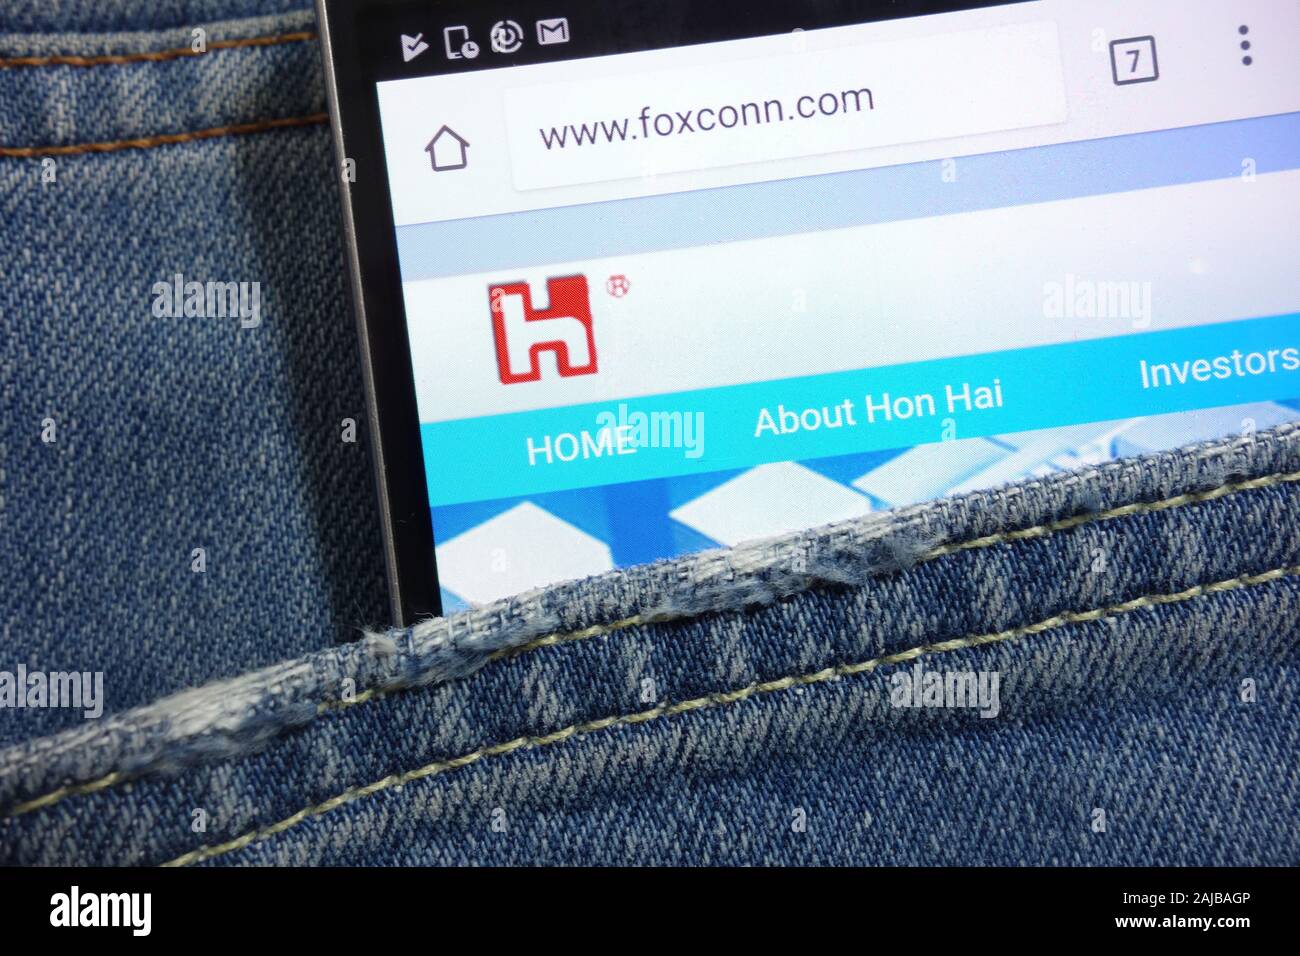 Foxconn website displayed on smartphone hidden in jeans pocket Stock Photo